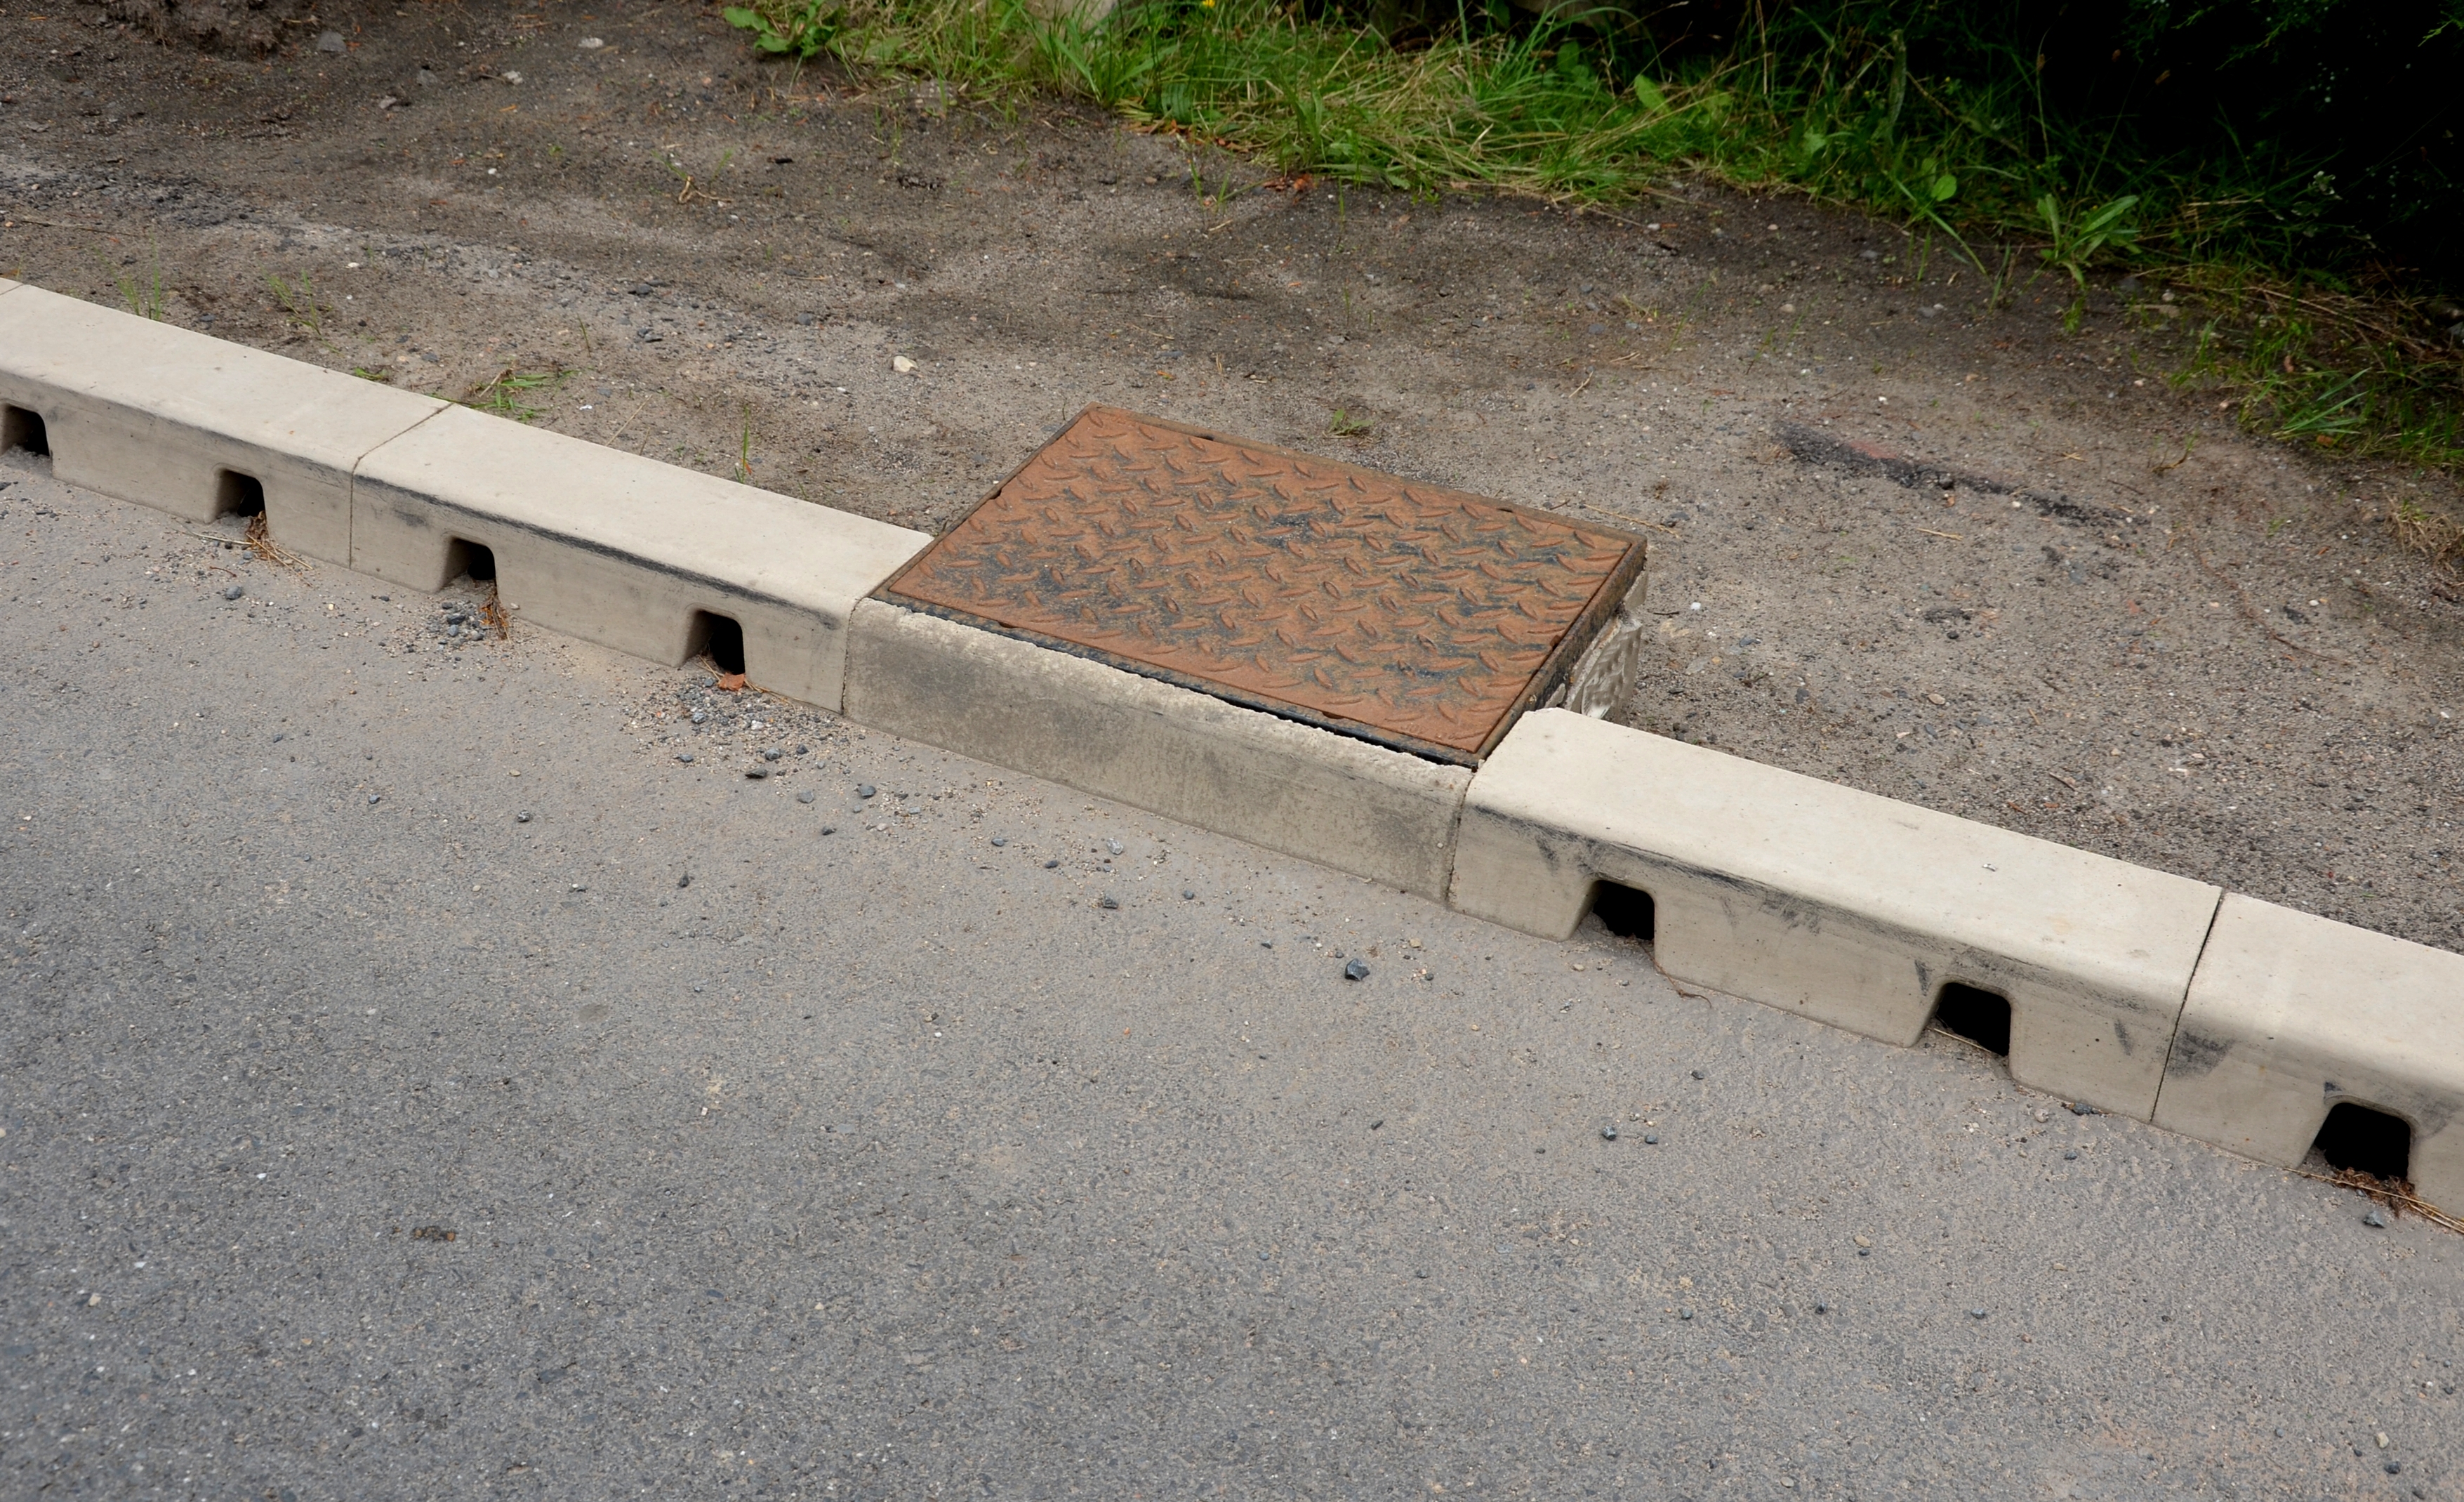 Drainage hidden on the edge of an asphalt road. | Source: Shutterstock